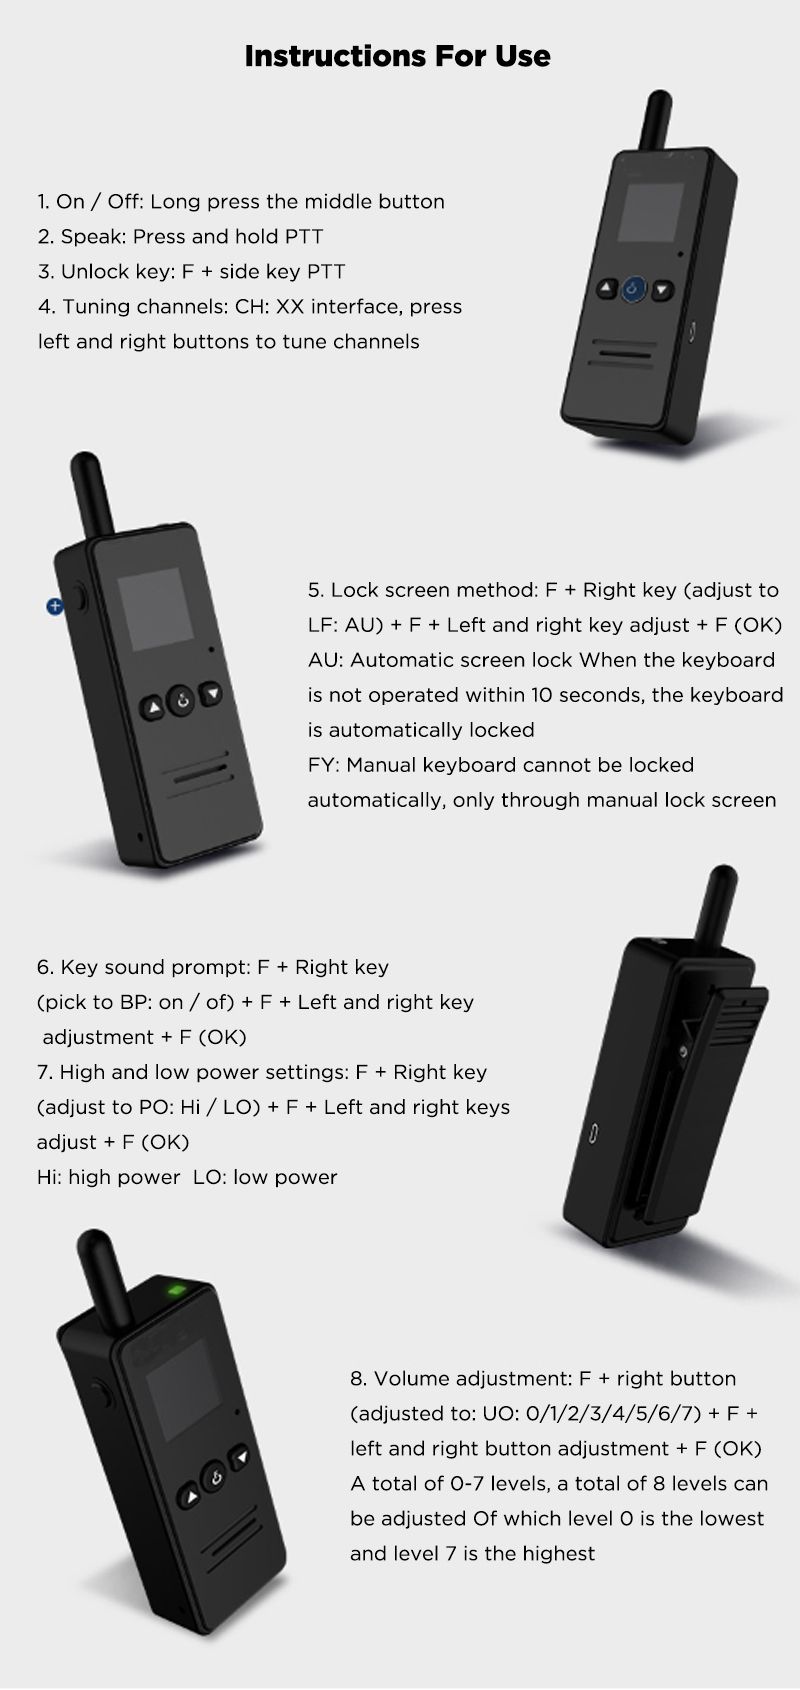 THINKYOUNG-T8-16-Channels-400-470MHz-45g-Lightweight-Mini-Ultra-Thin-Handheld-Radio-Walkie-Talkie-Ho-1617300